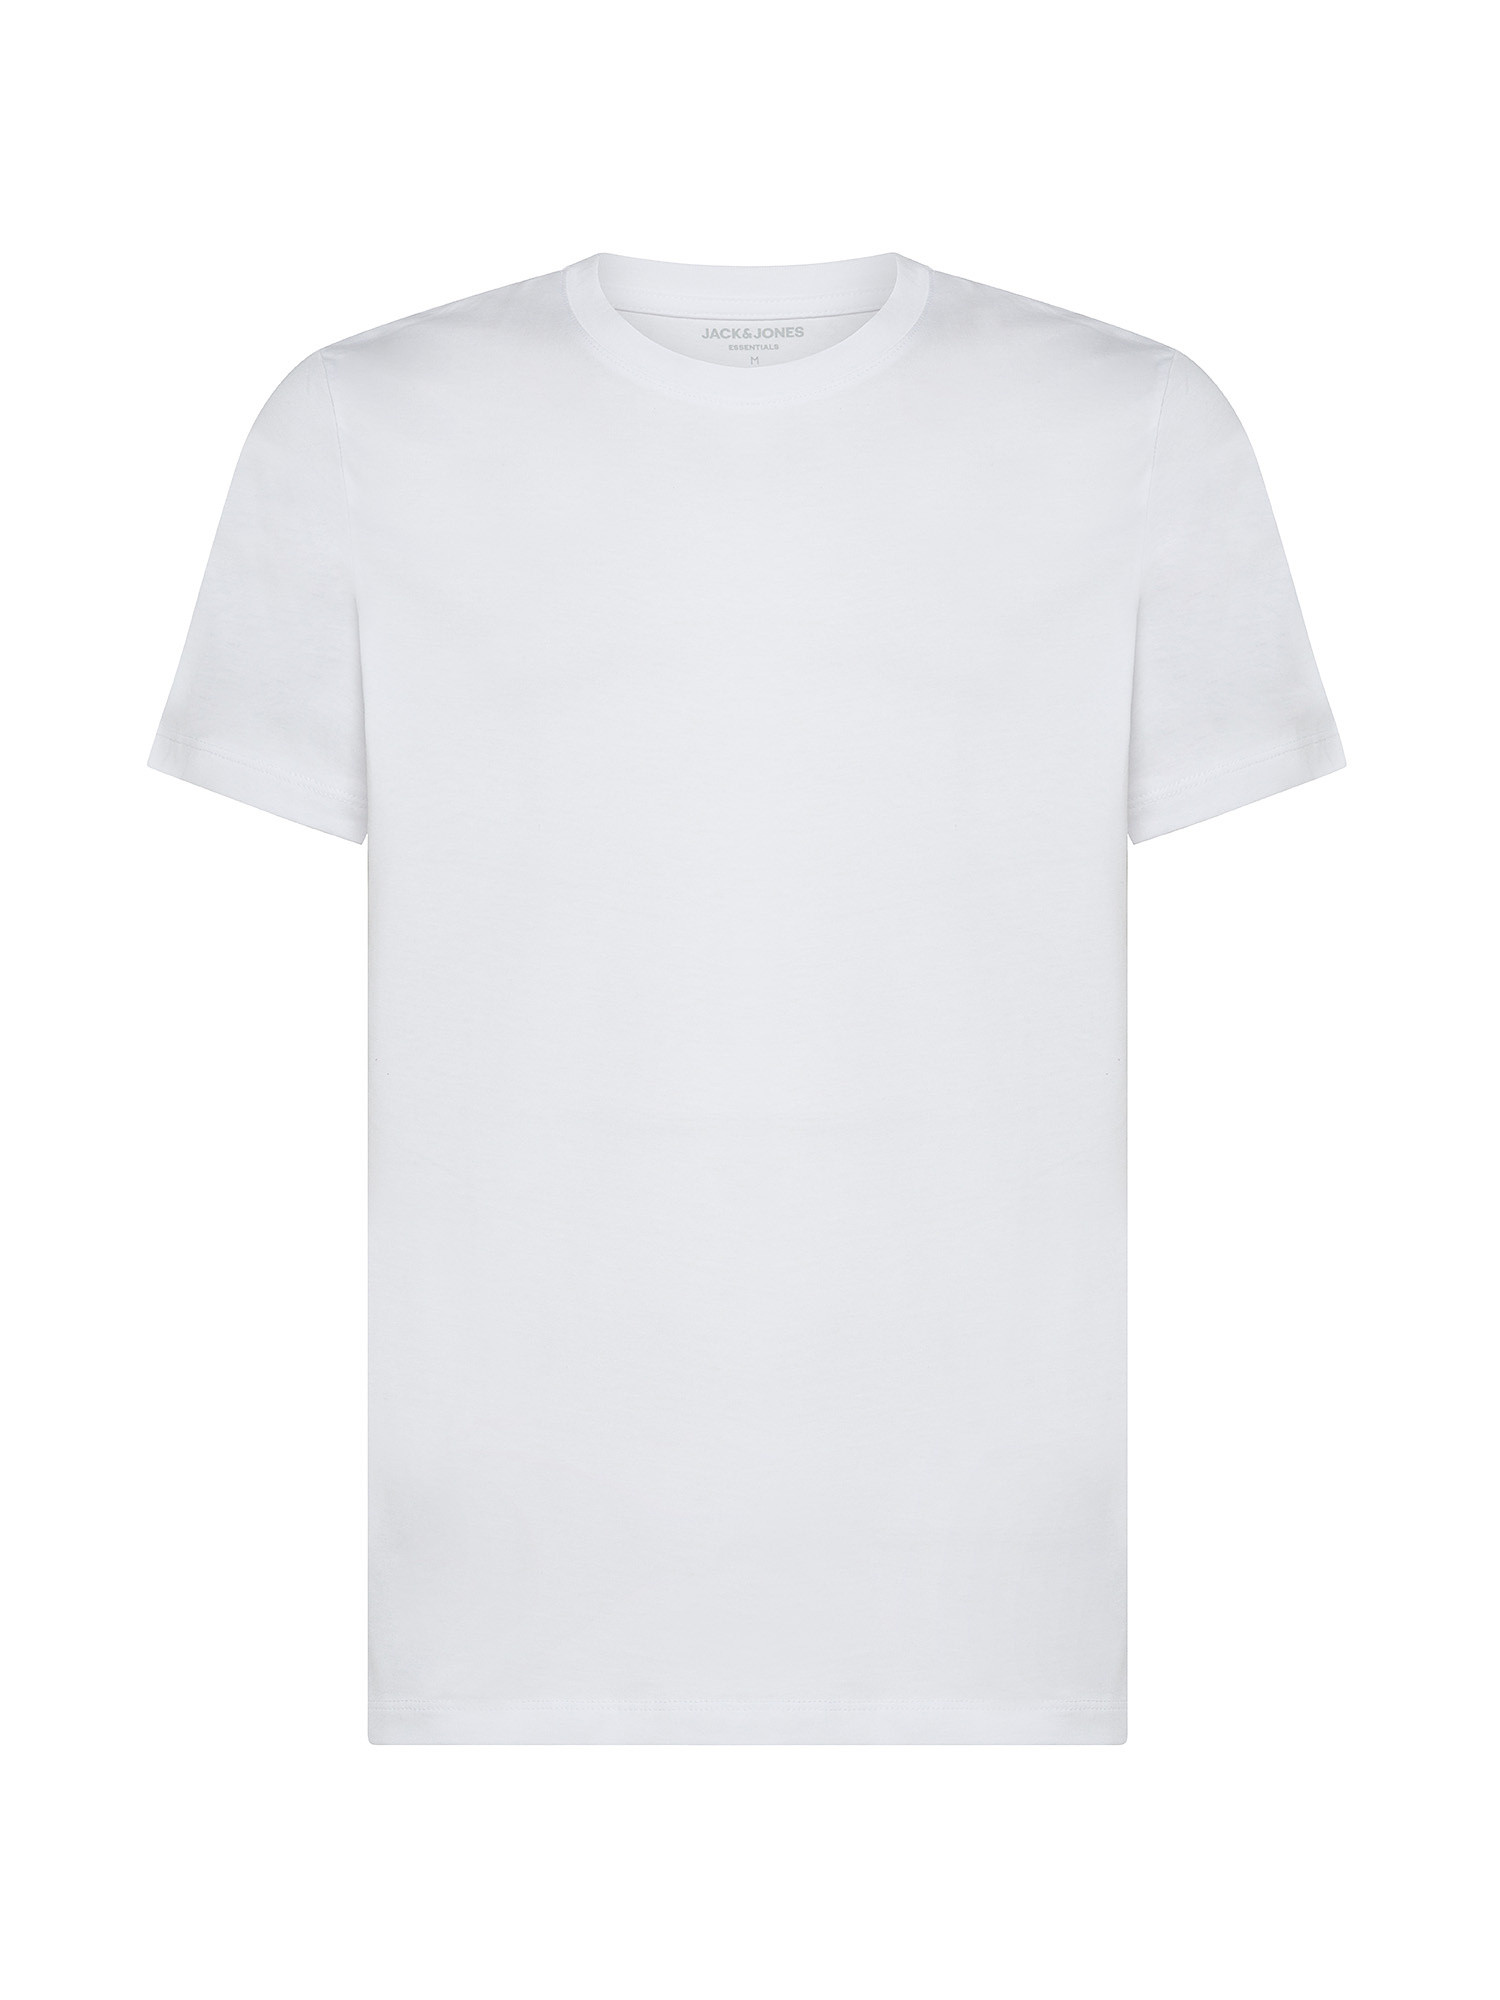 Jack & Jones - Cotton T-shirt, White, large image number 0